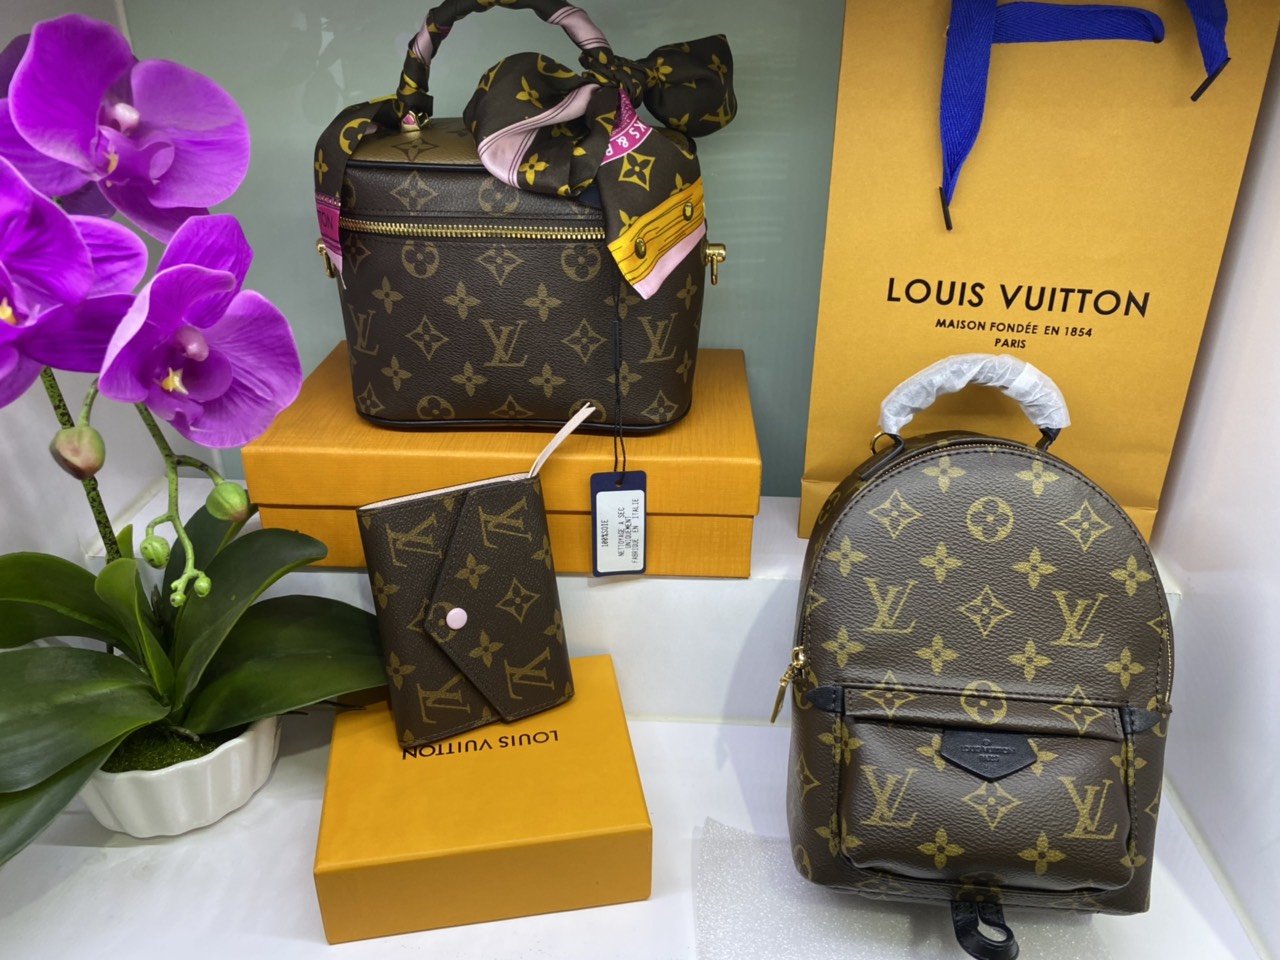 Shop Sỉ Túi xách Louis Vuitton Replica 1:1